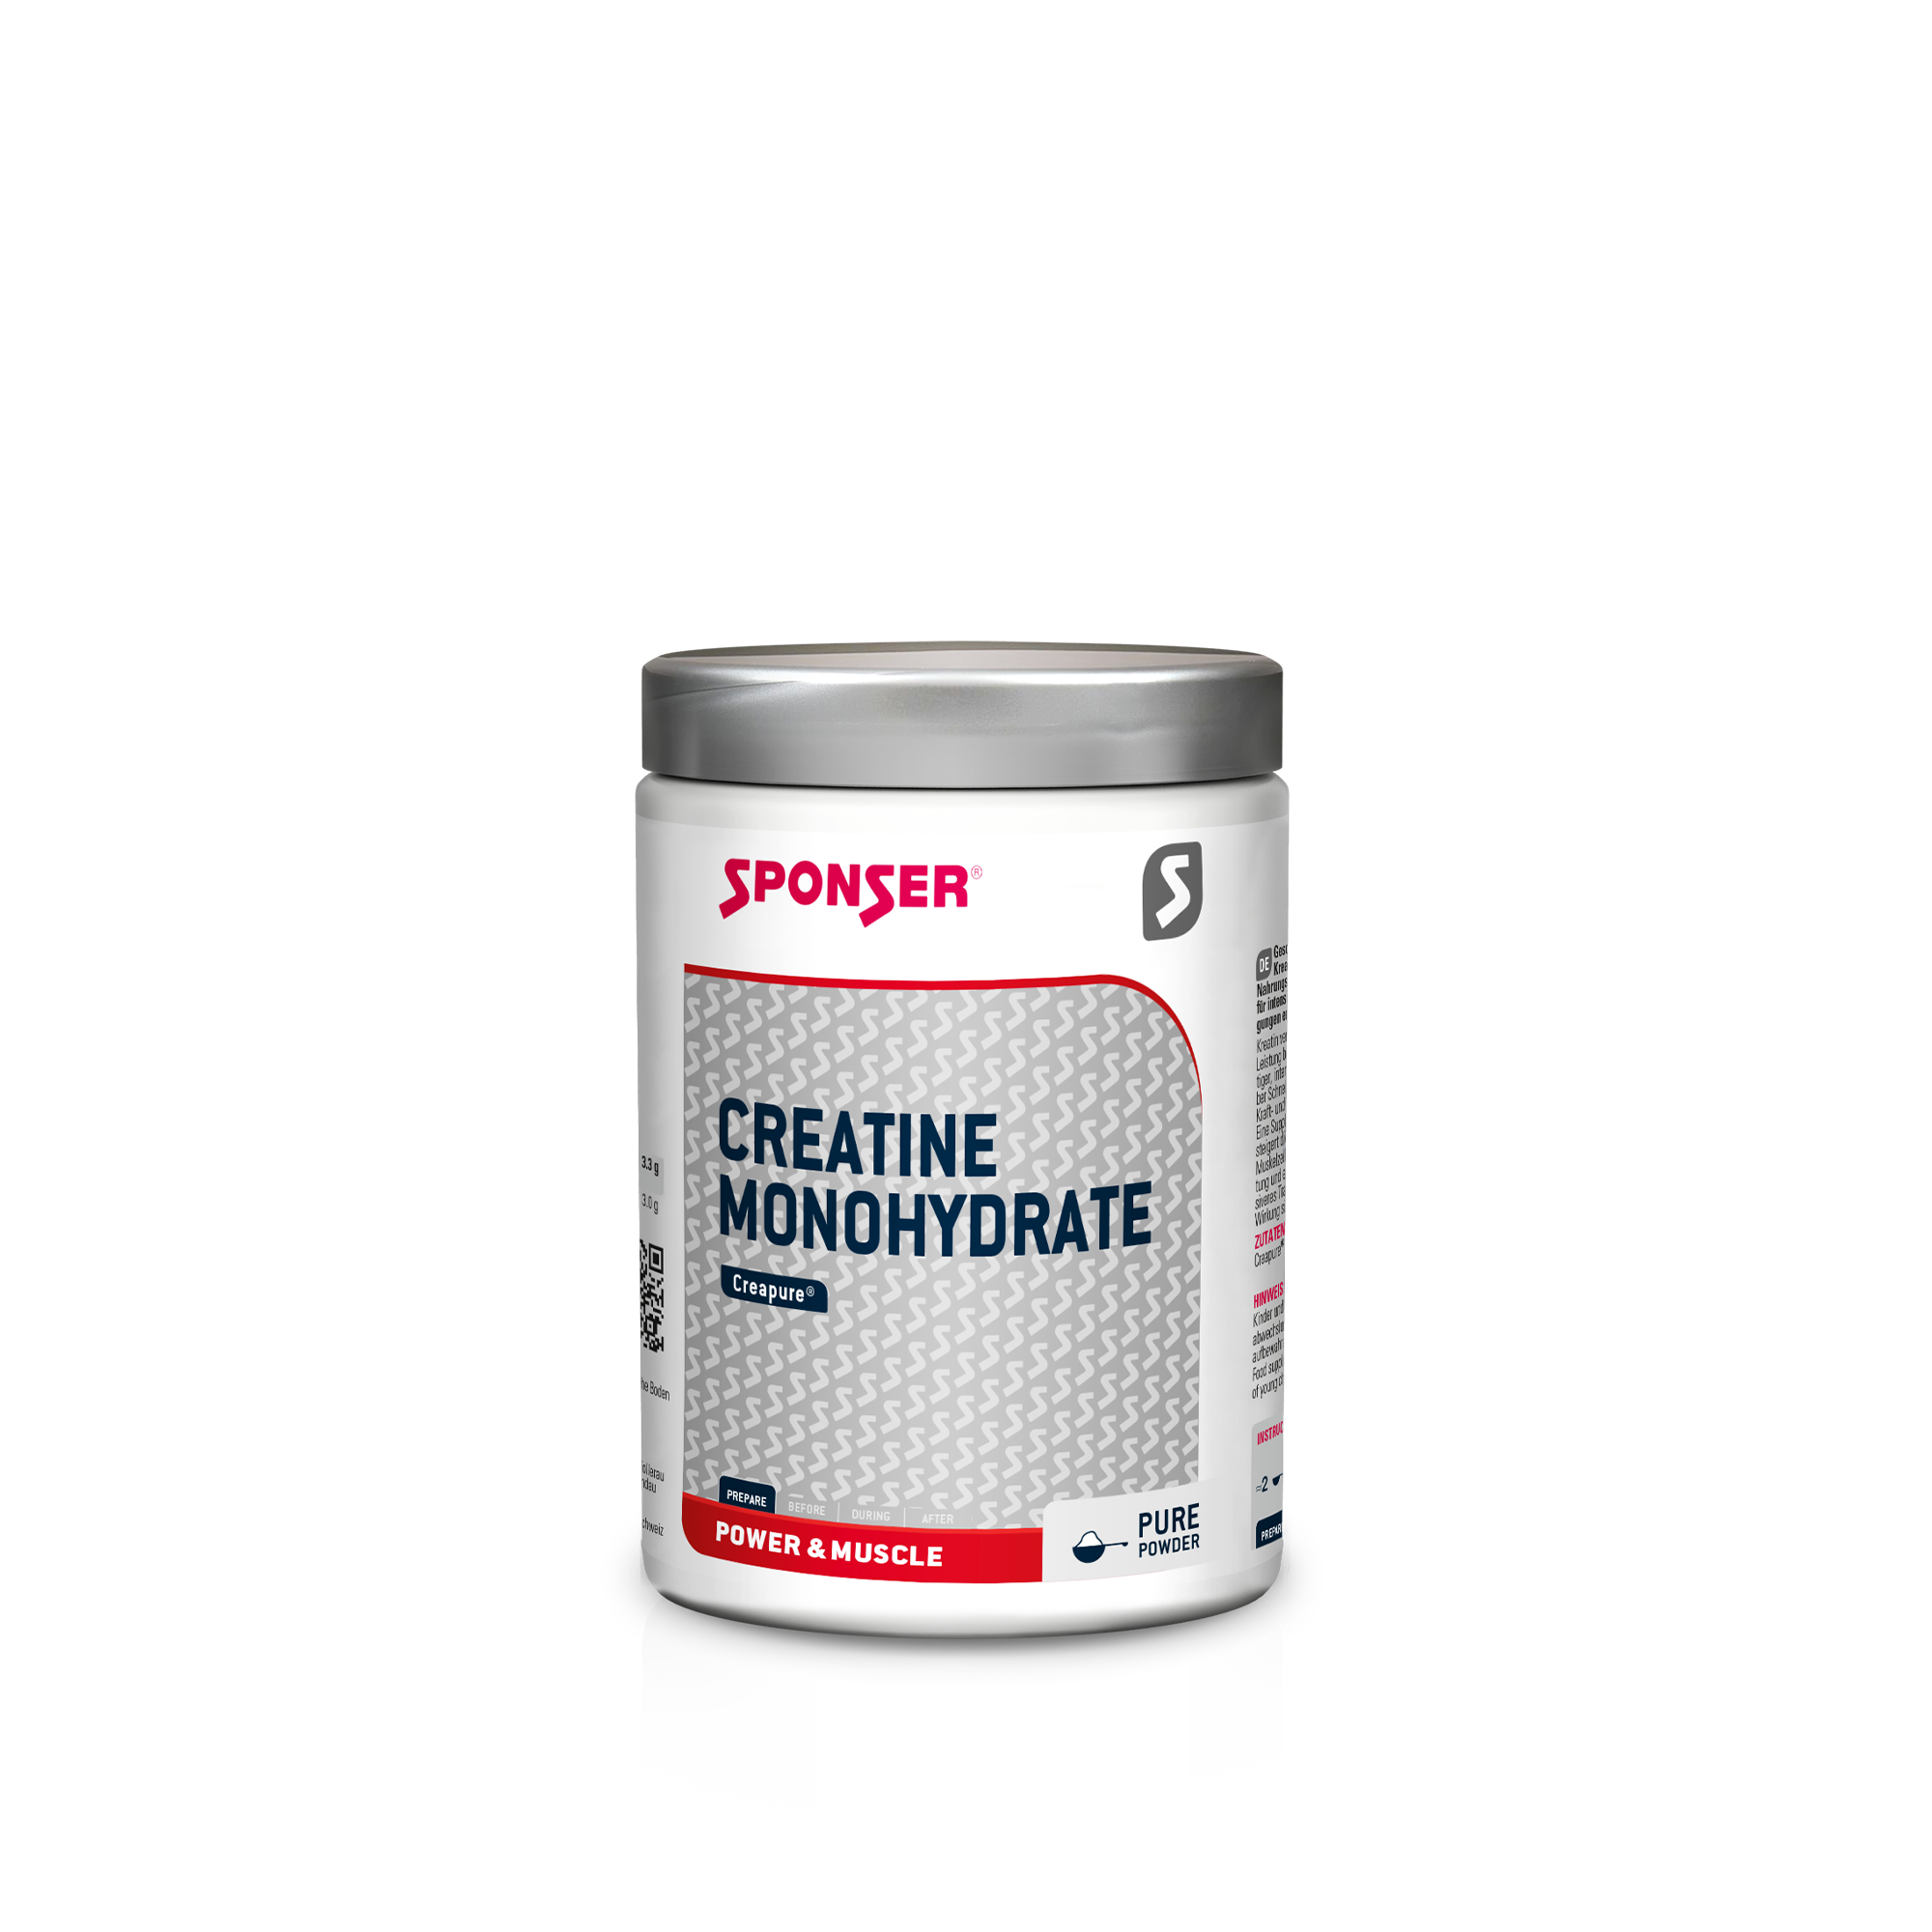 Sponser Creatine Monohydrate - 500 g.